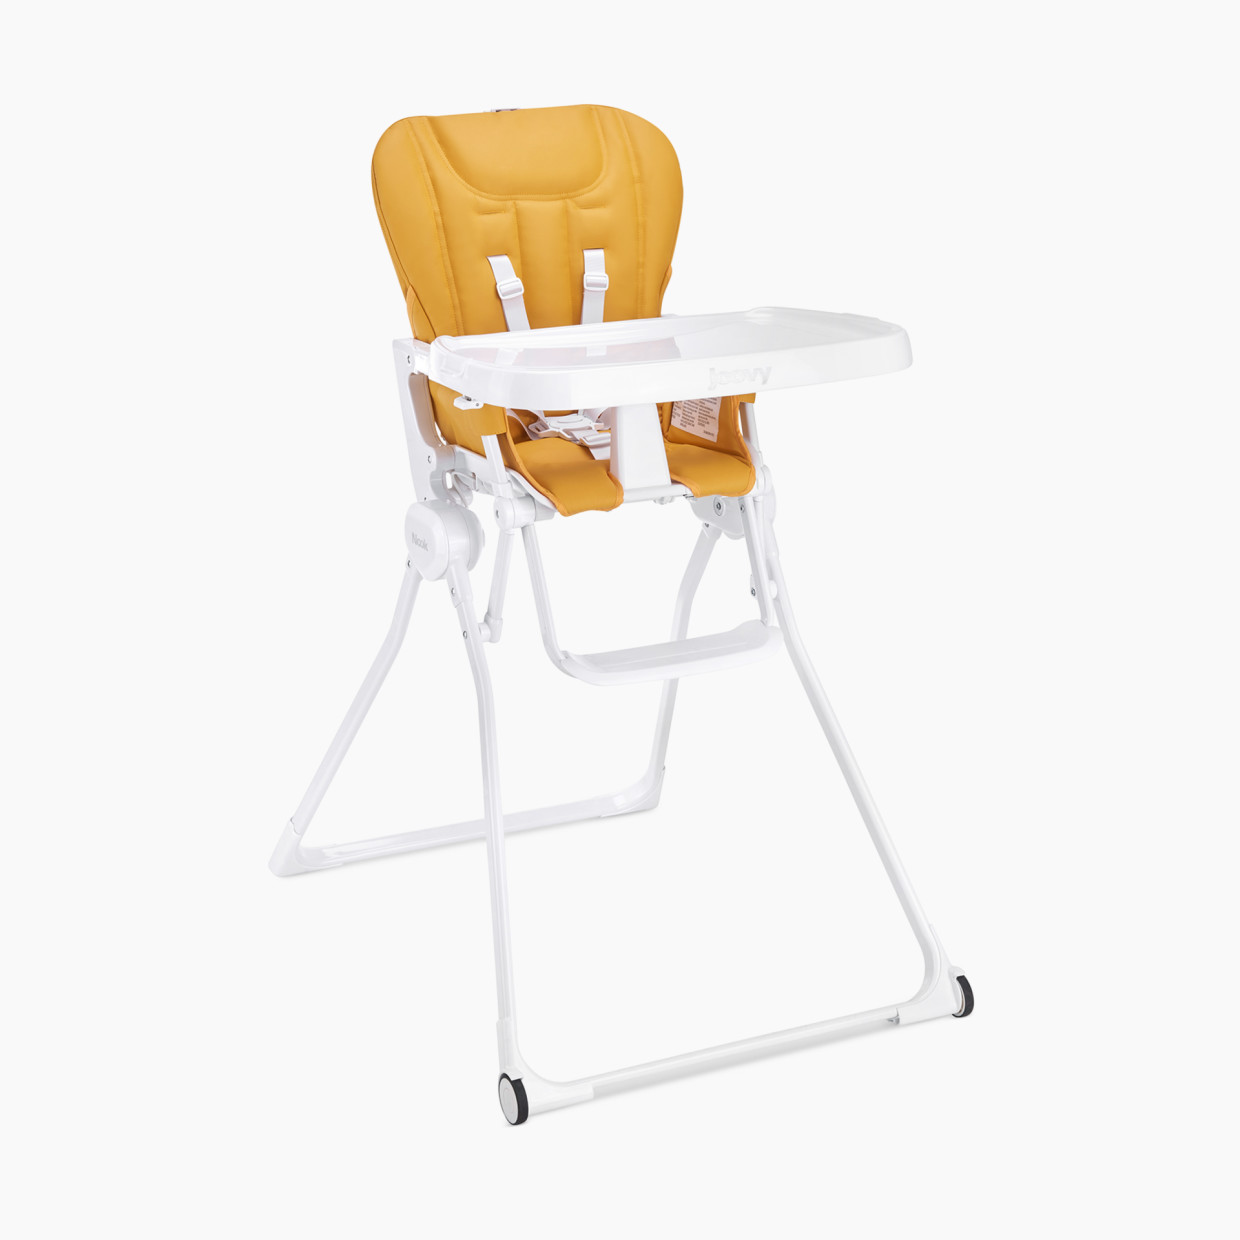 Joovy Nook Newborn High Chair - Mustard.